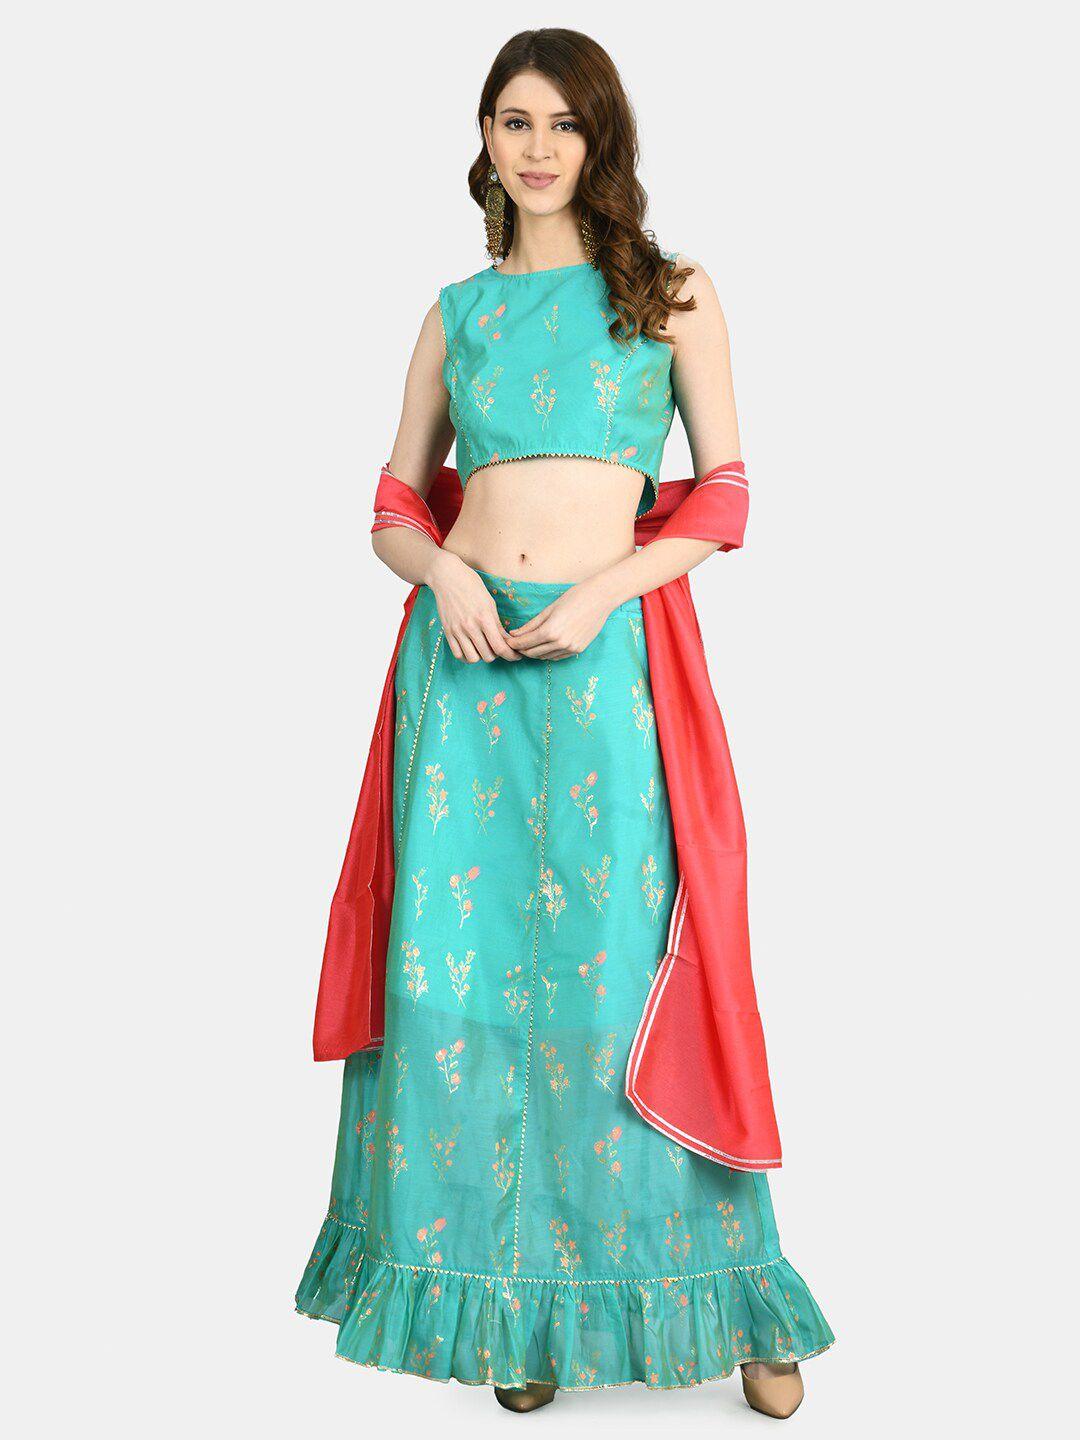 myshka turquoise blue & gold-toned printed ready to wear lehenga & blouse with dupatta